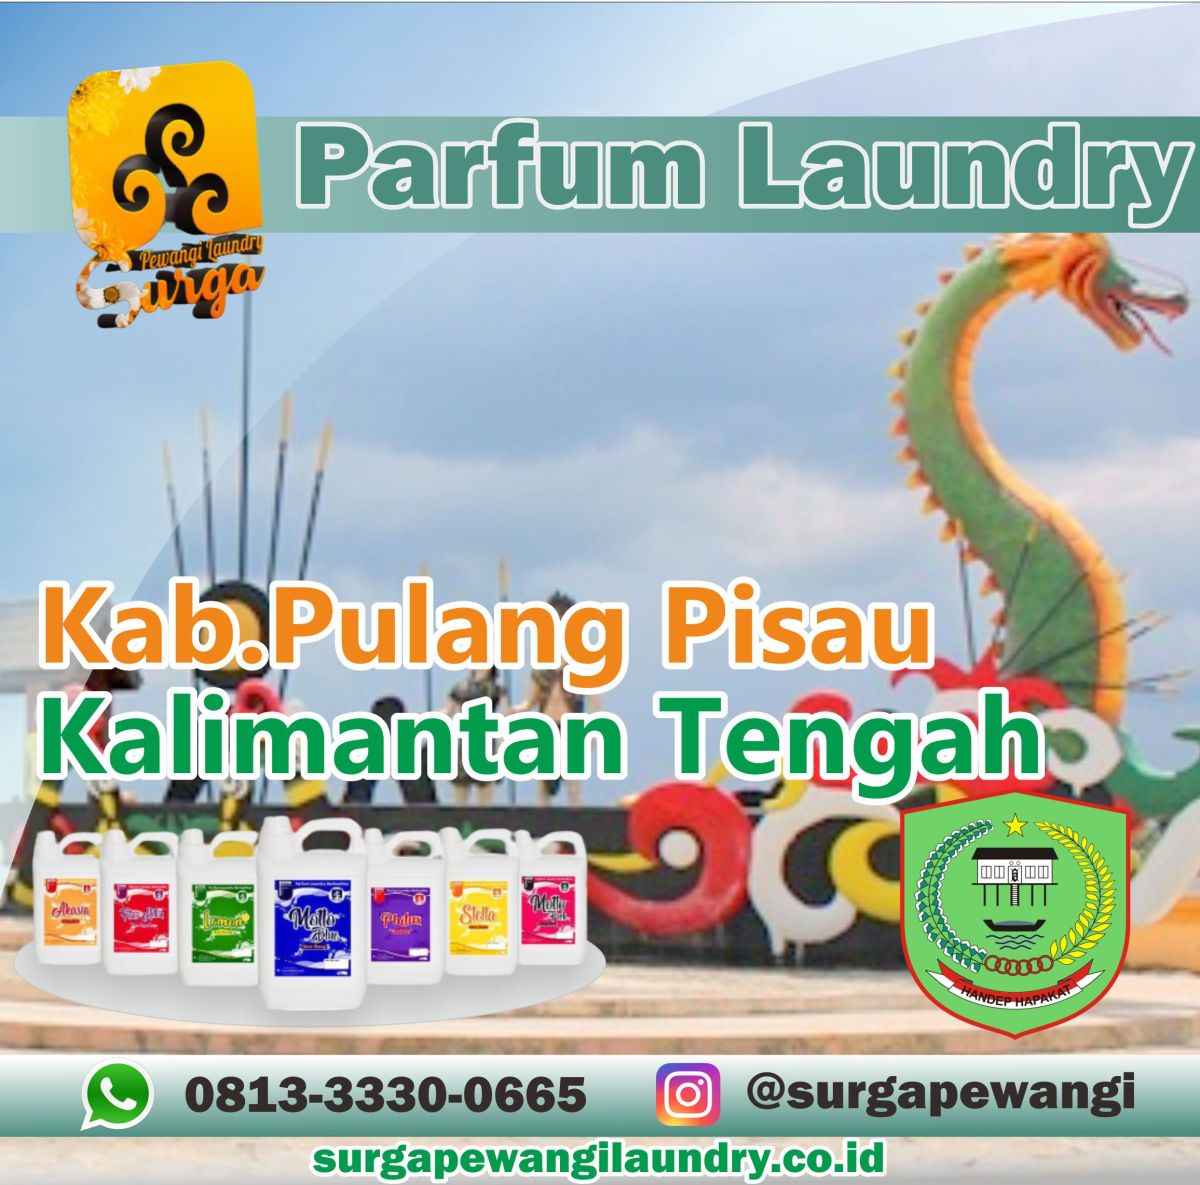 Parfum Laundry Kabupaten Pulang Pisau, Kalimantan Tengah